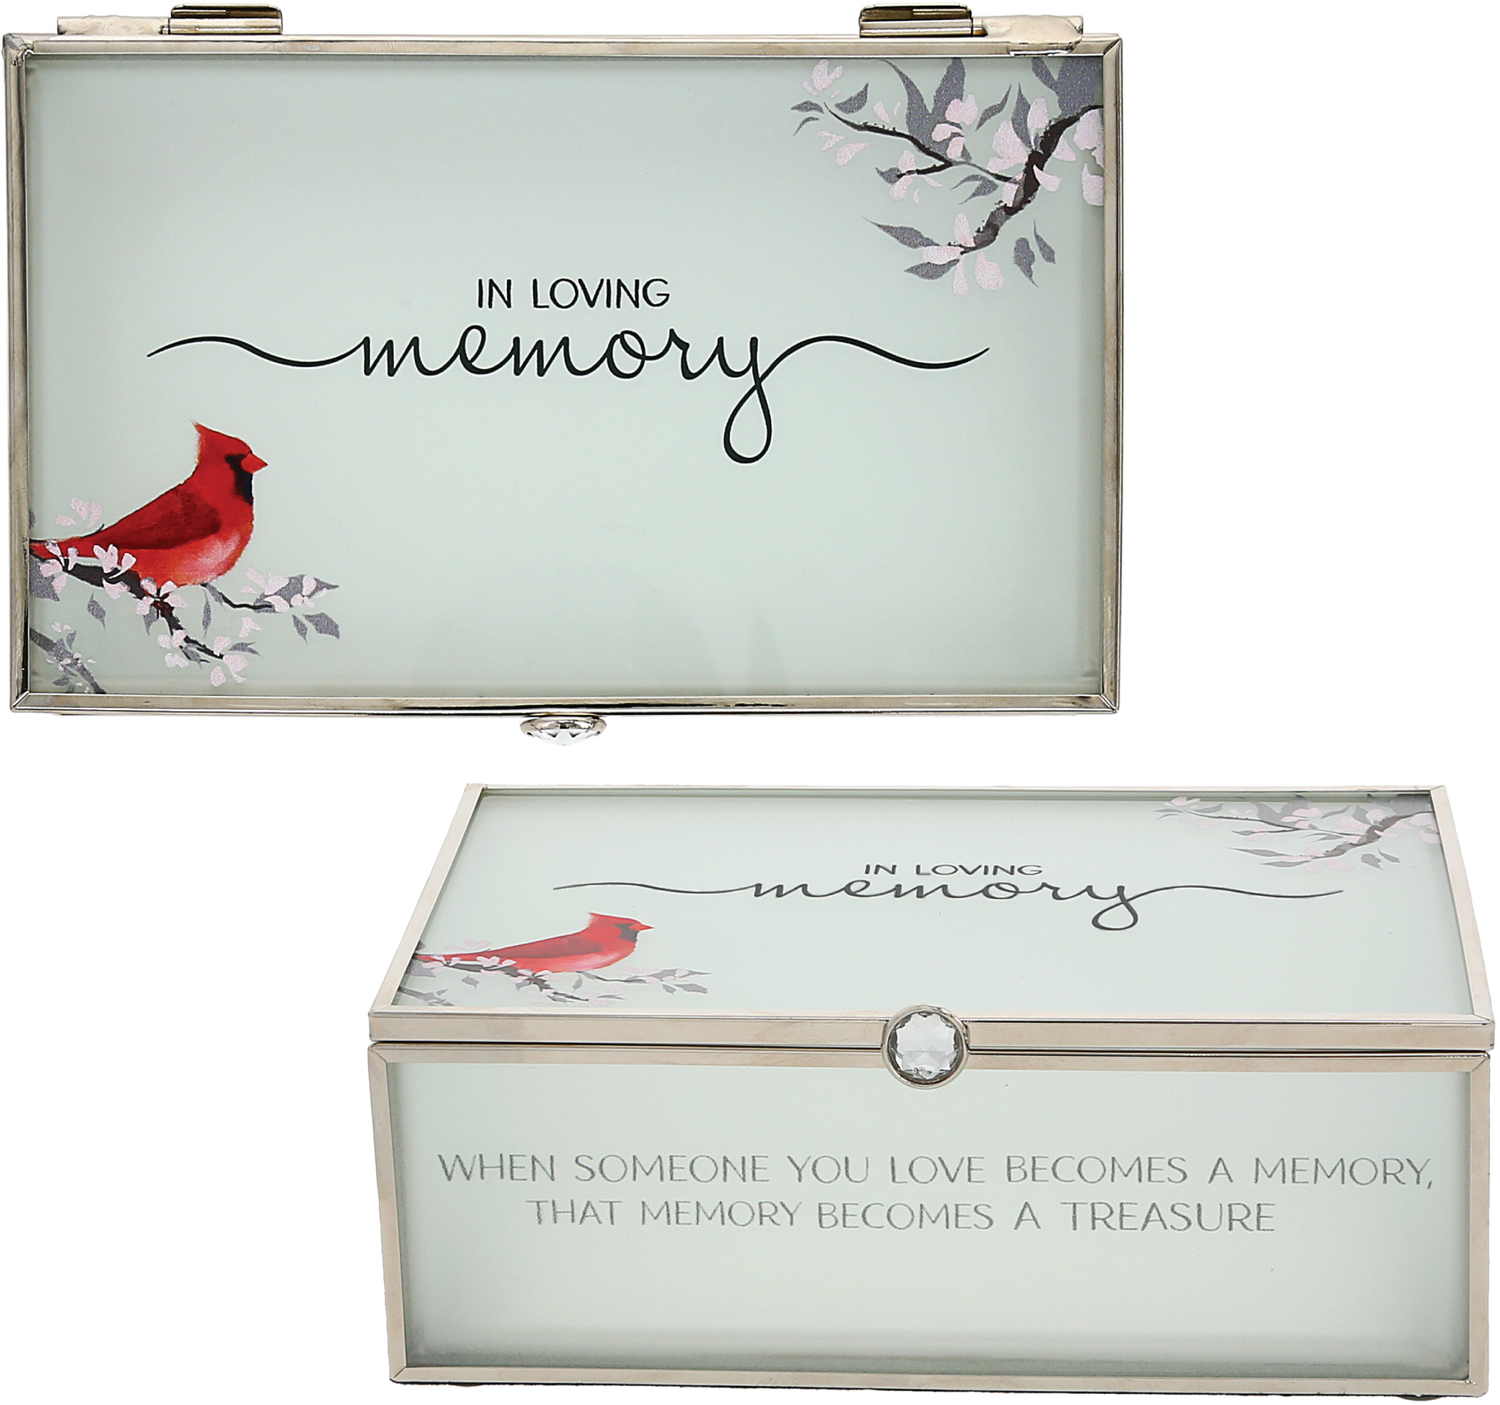 In Loving Memory by Always by Your Side - In Loving Memory - 6" x 3.5" Glass Keepsake Box